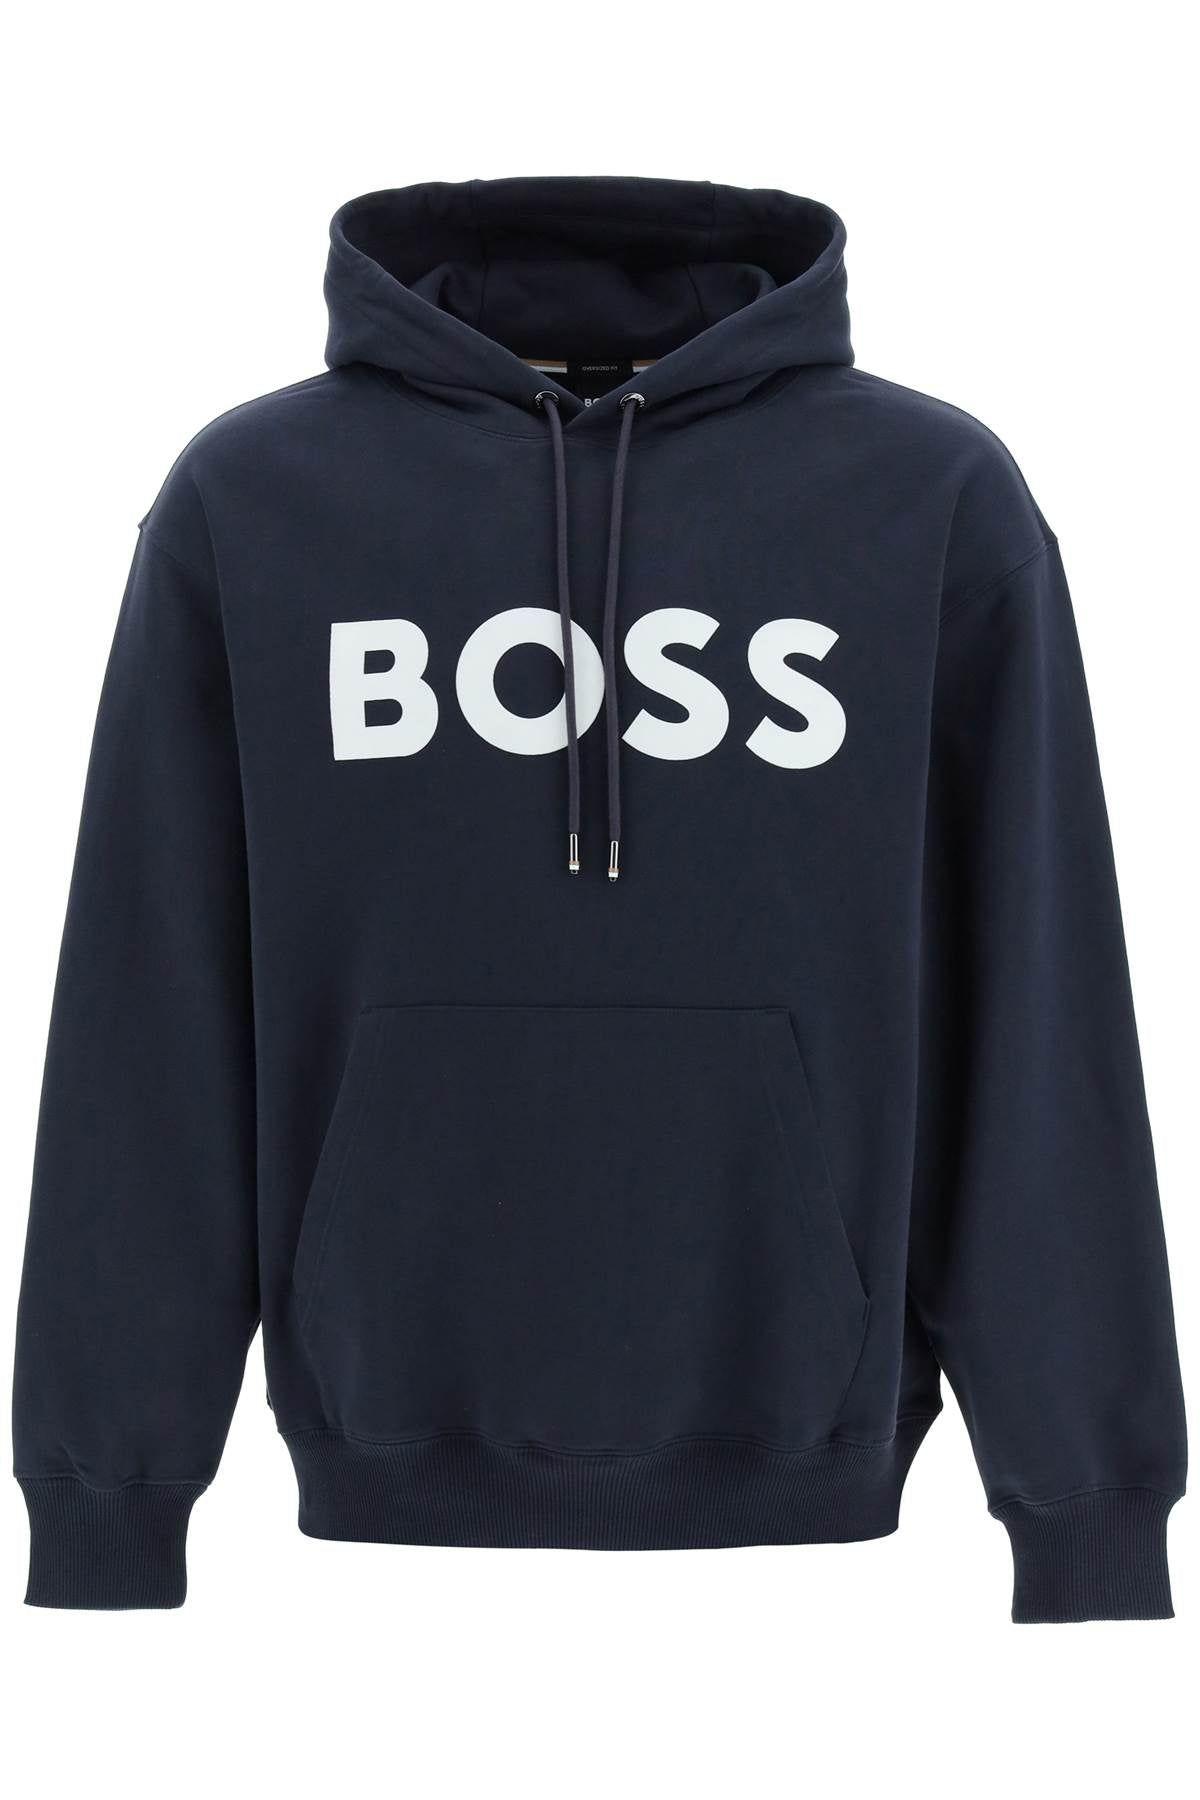 BOSS by HUGO BOSS Logo Print Hoodie in Blue for Men | Lyst